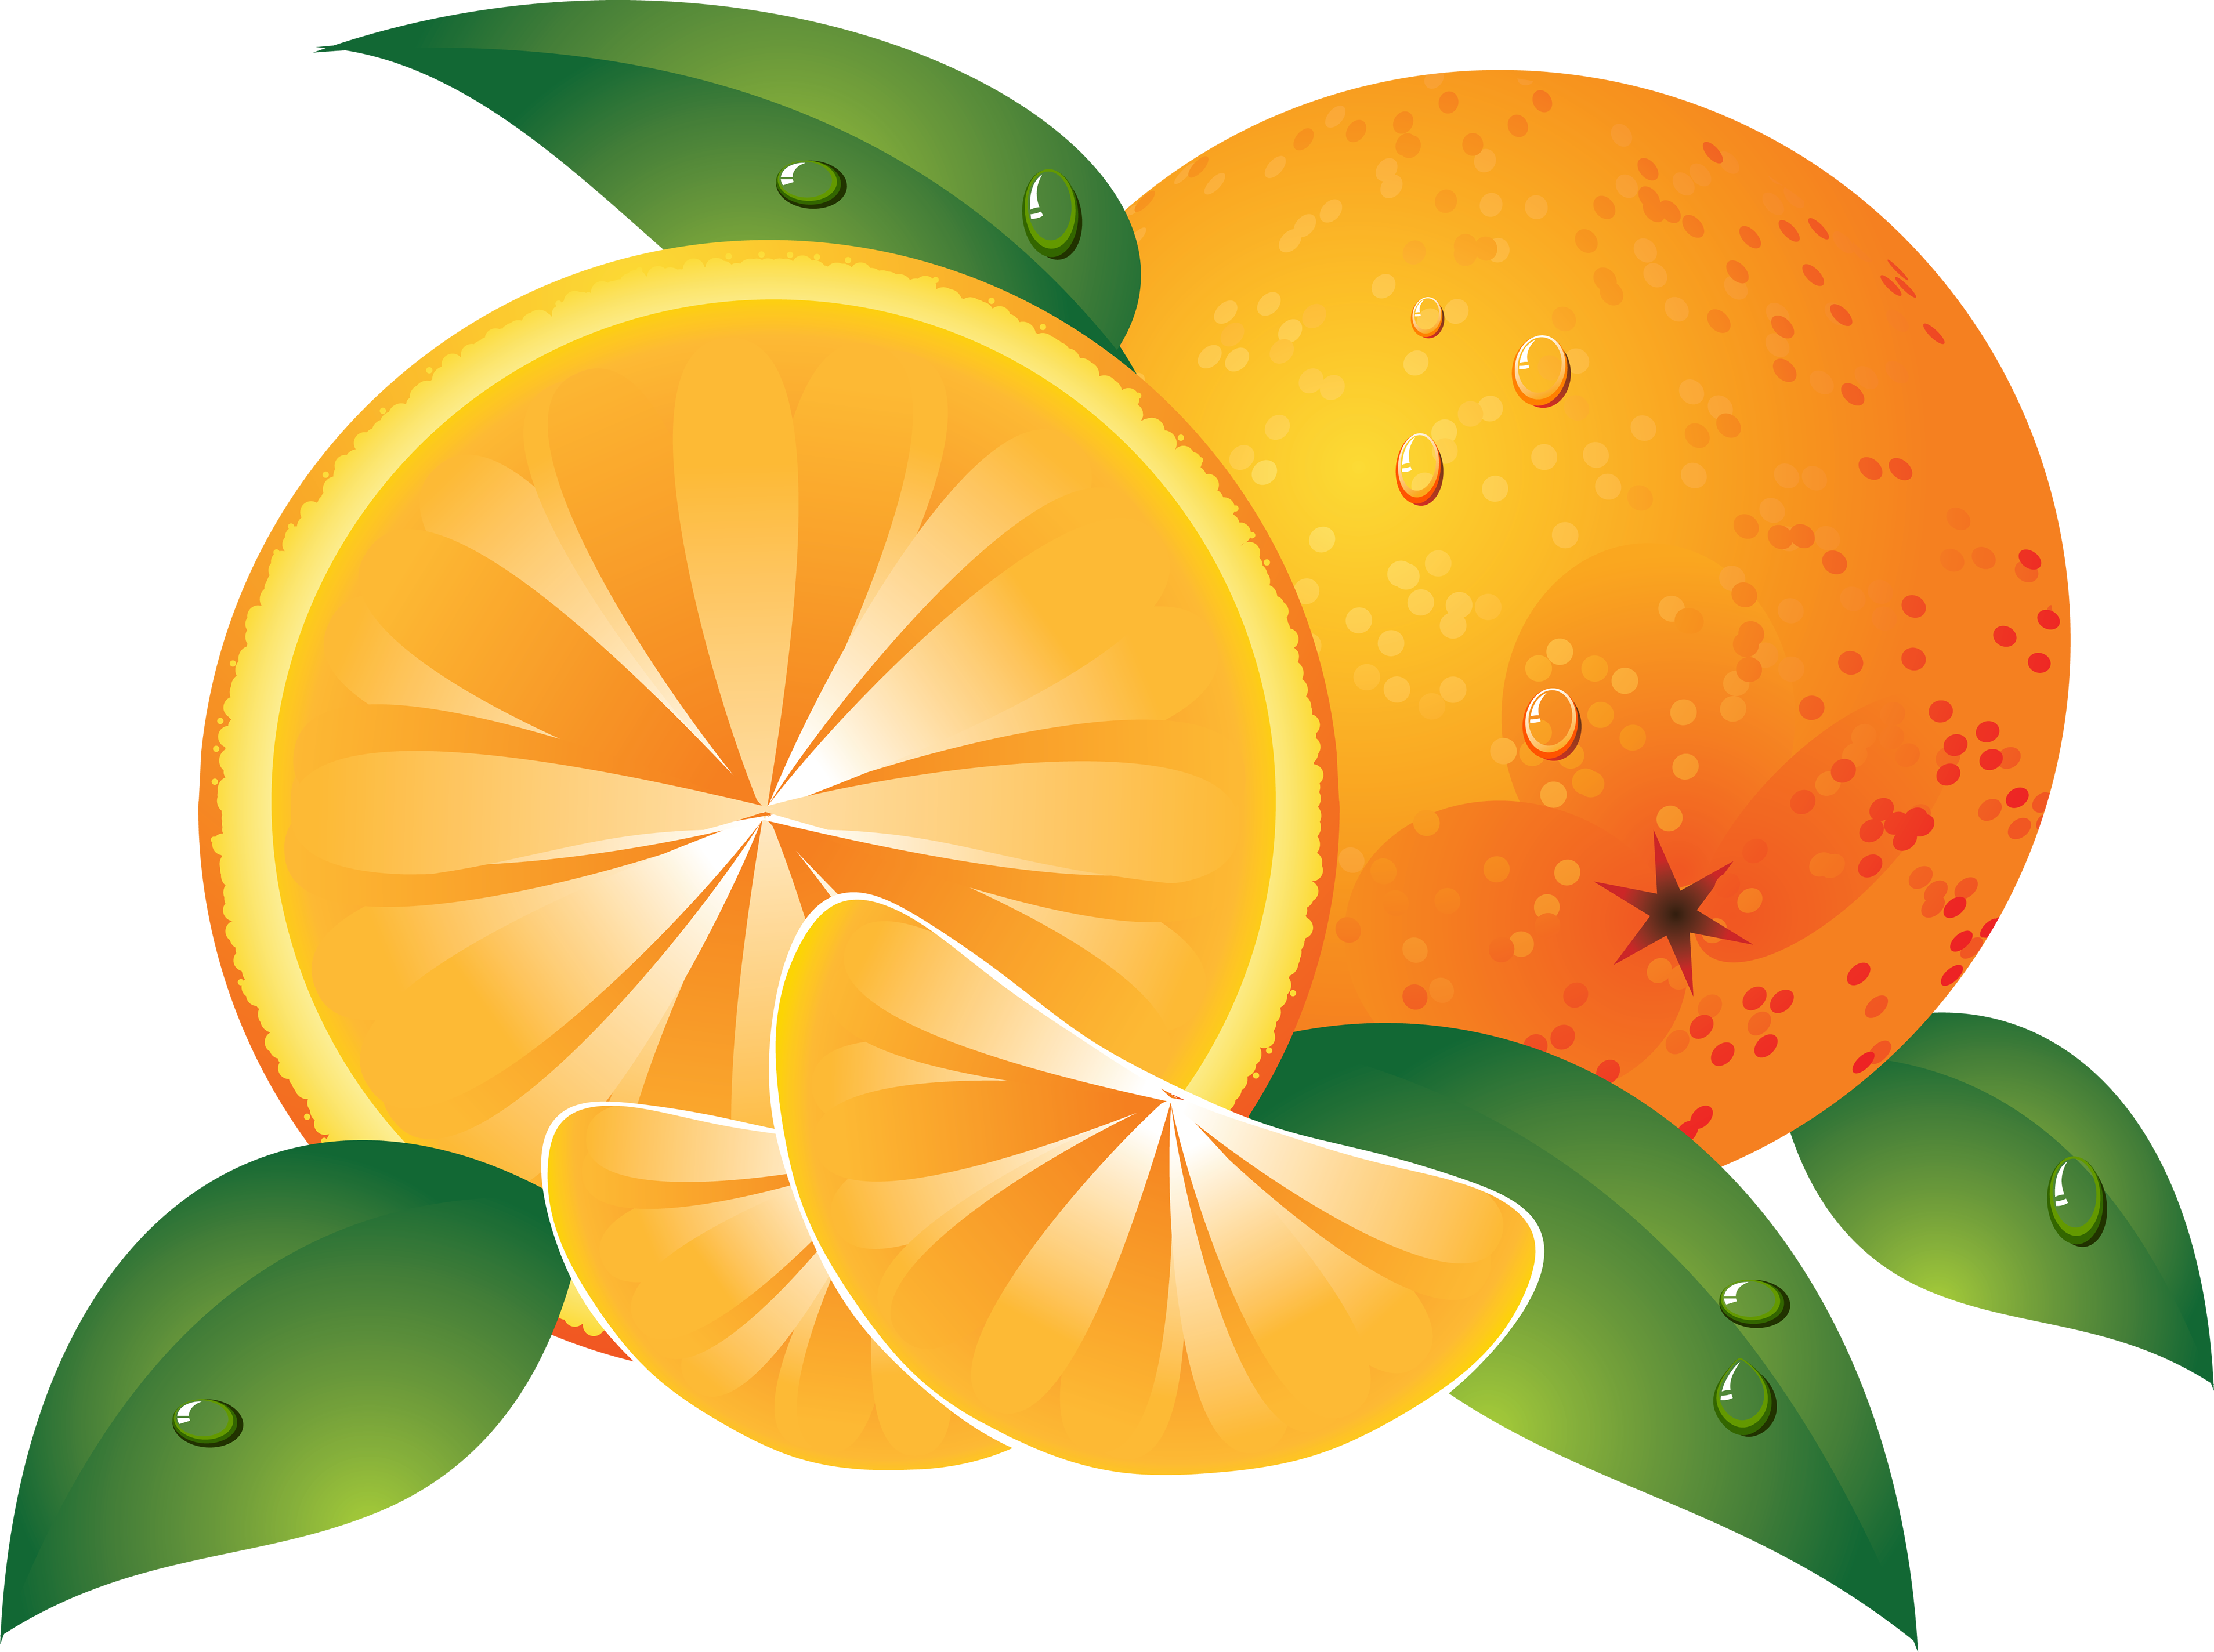 Orange | Oranges PNG Image